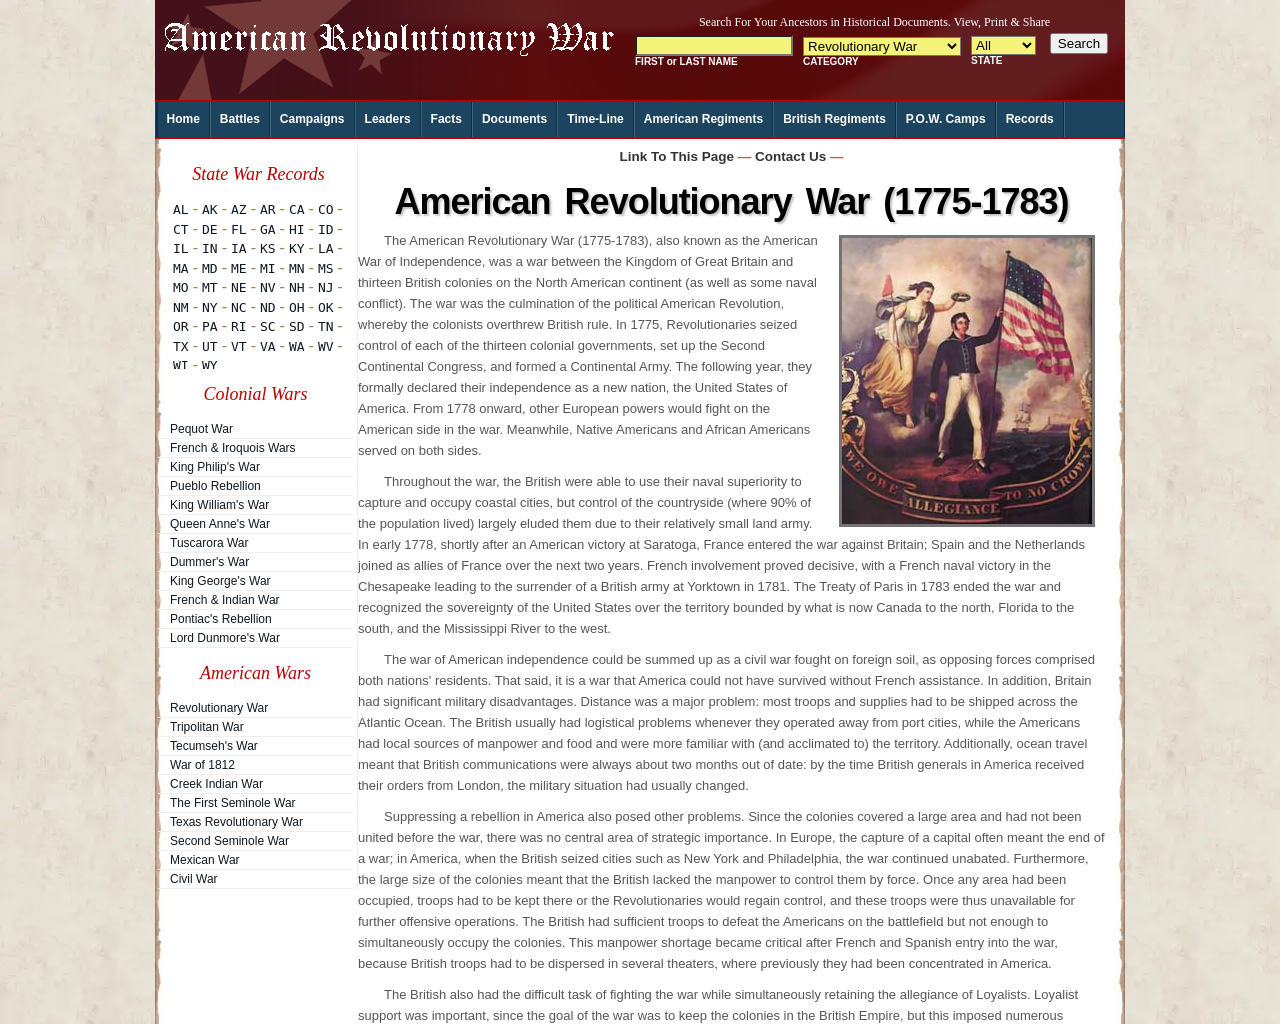 myrevolutionarywar.com